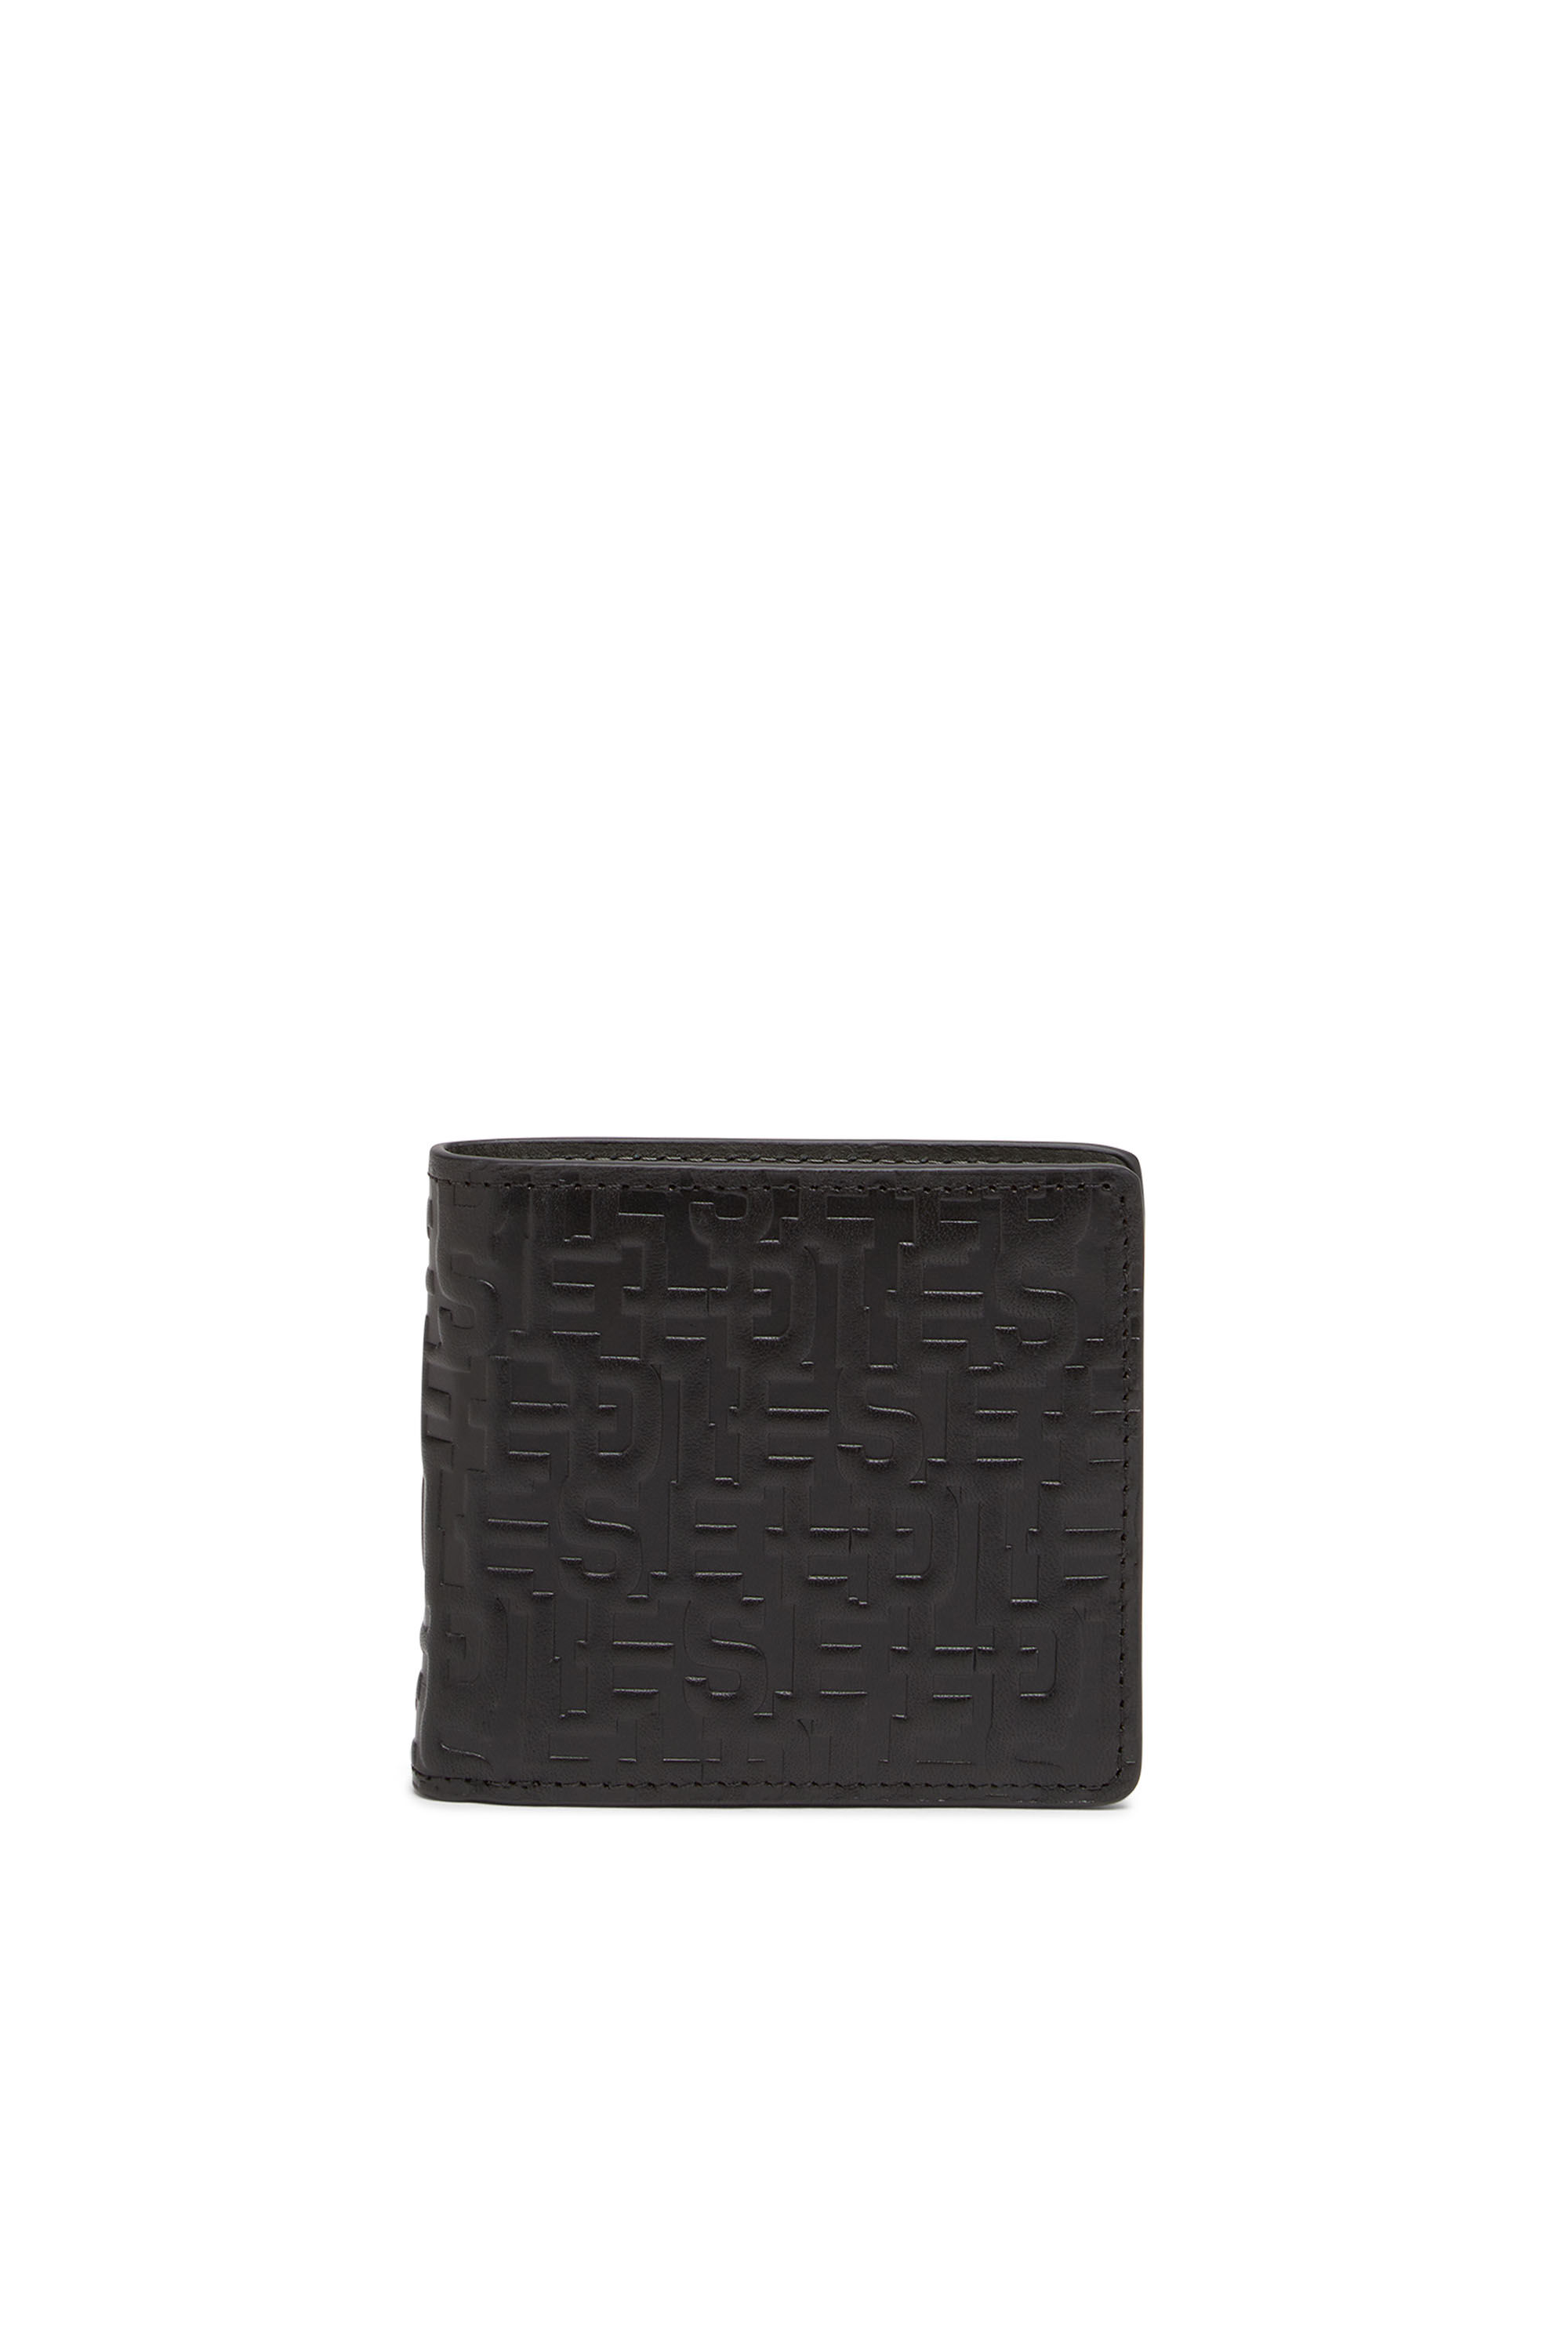 Loui Vuitton cartera billetera para hombre d\'occasion pour 375